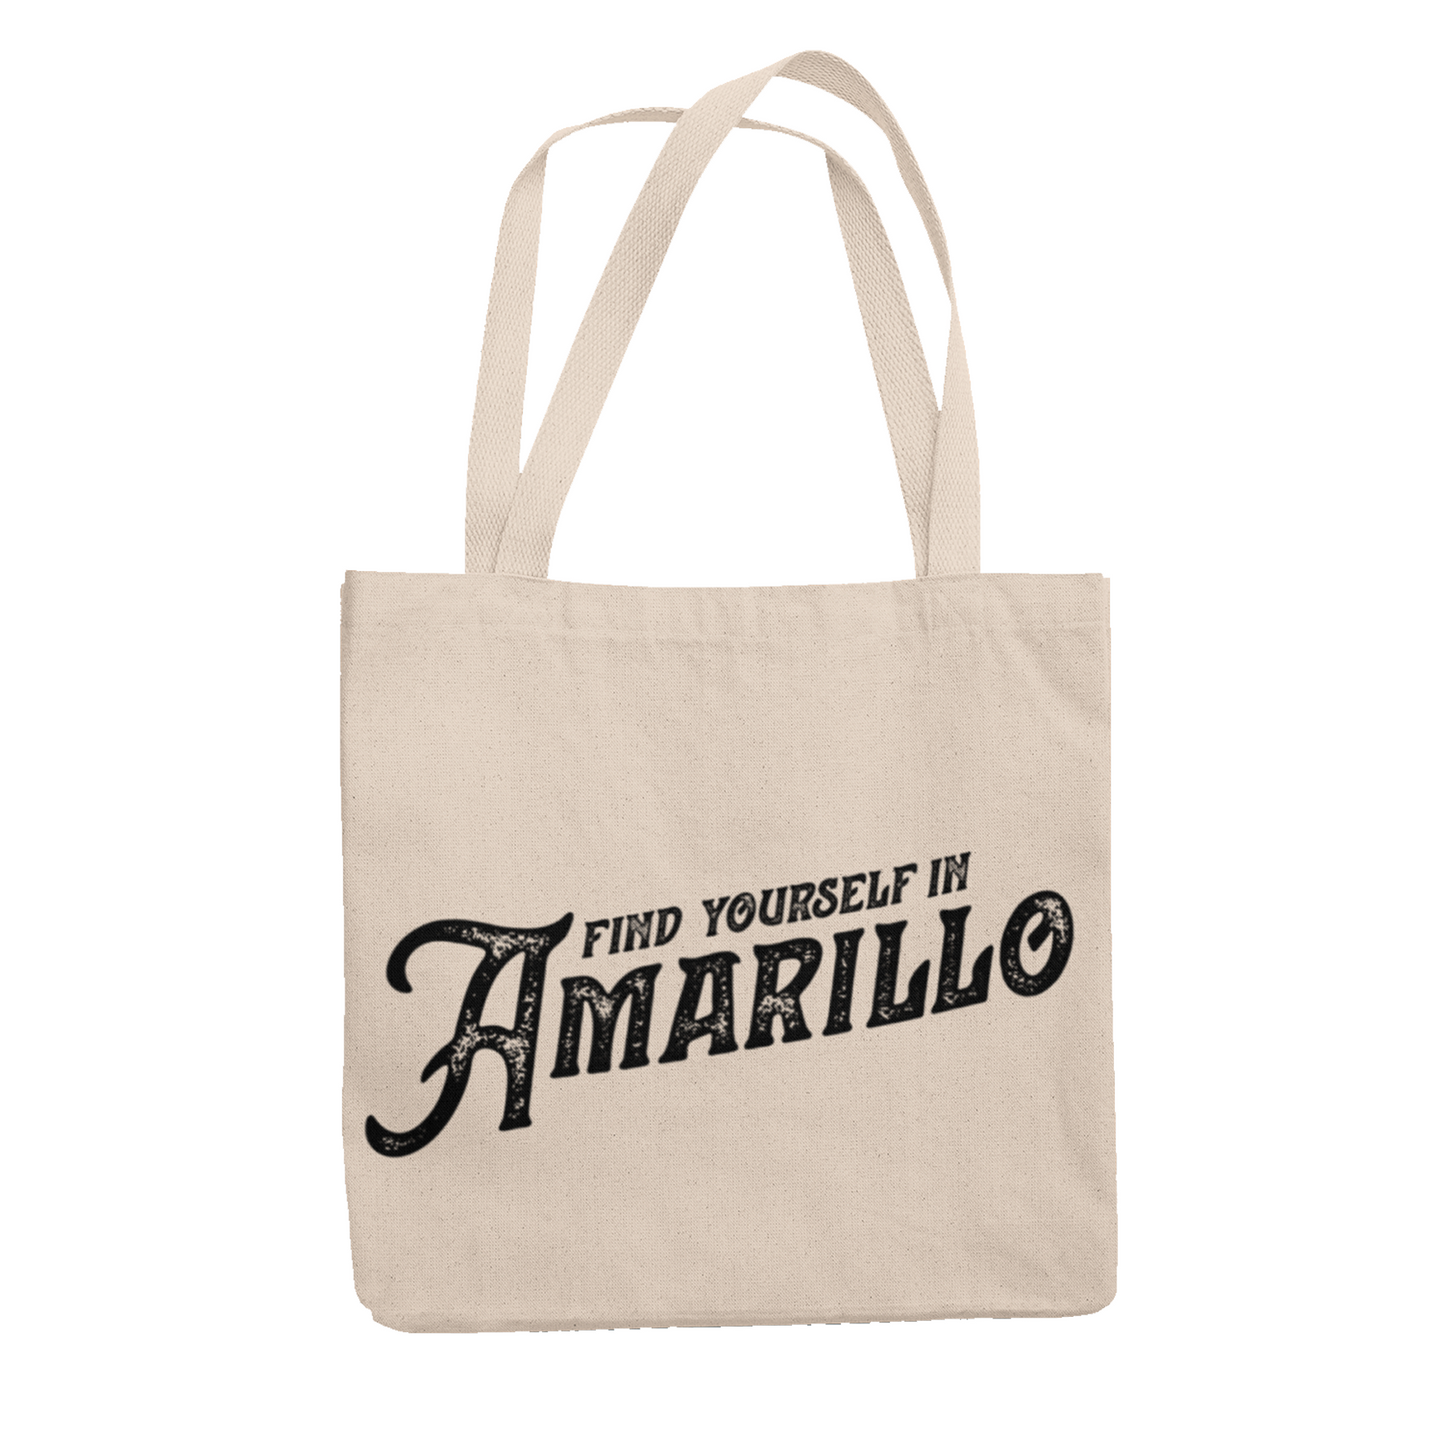 Amarillo Texas Tote Bag - Find Yourself